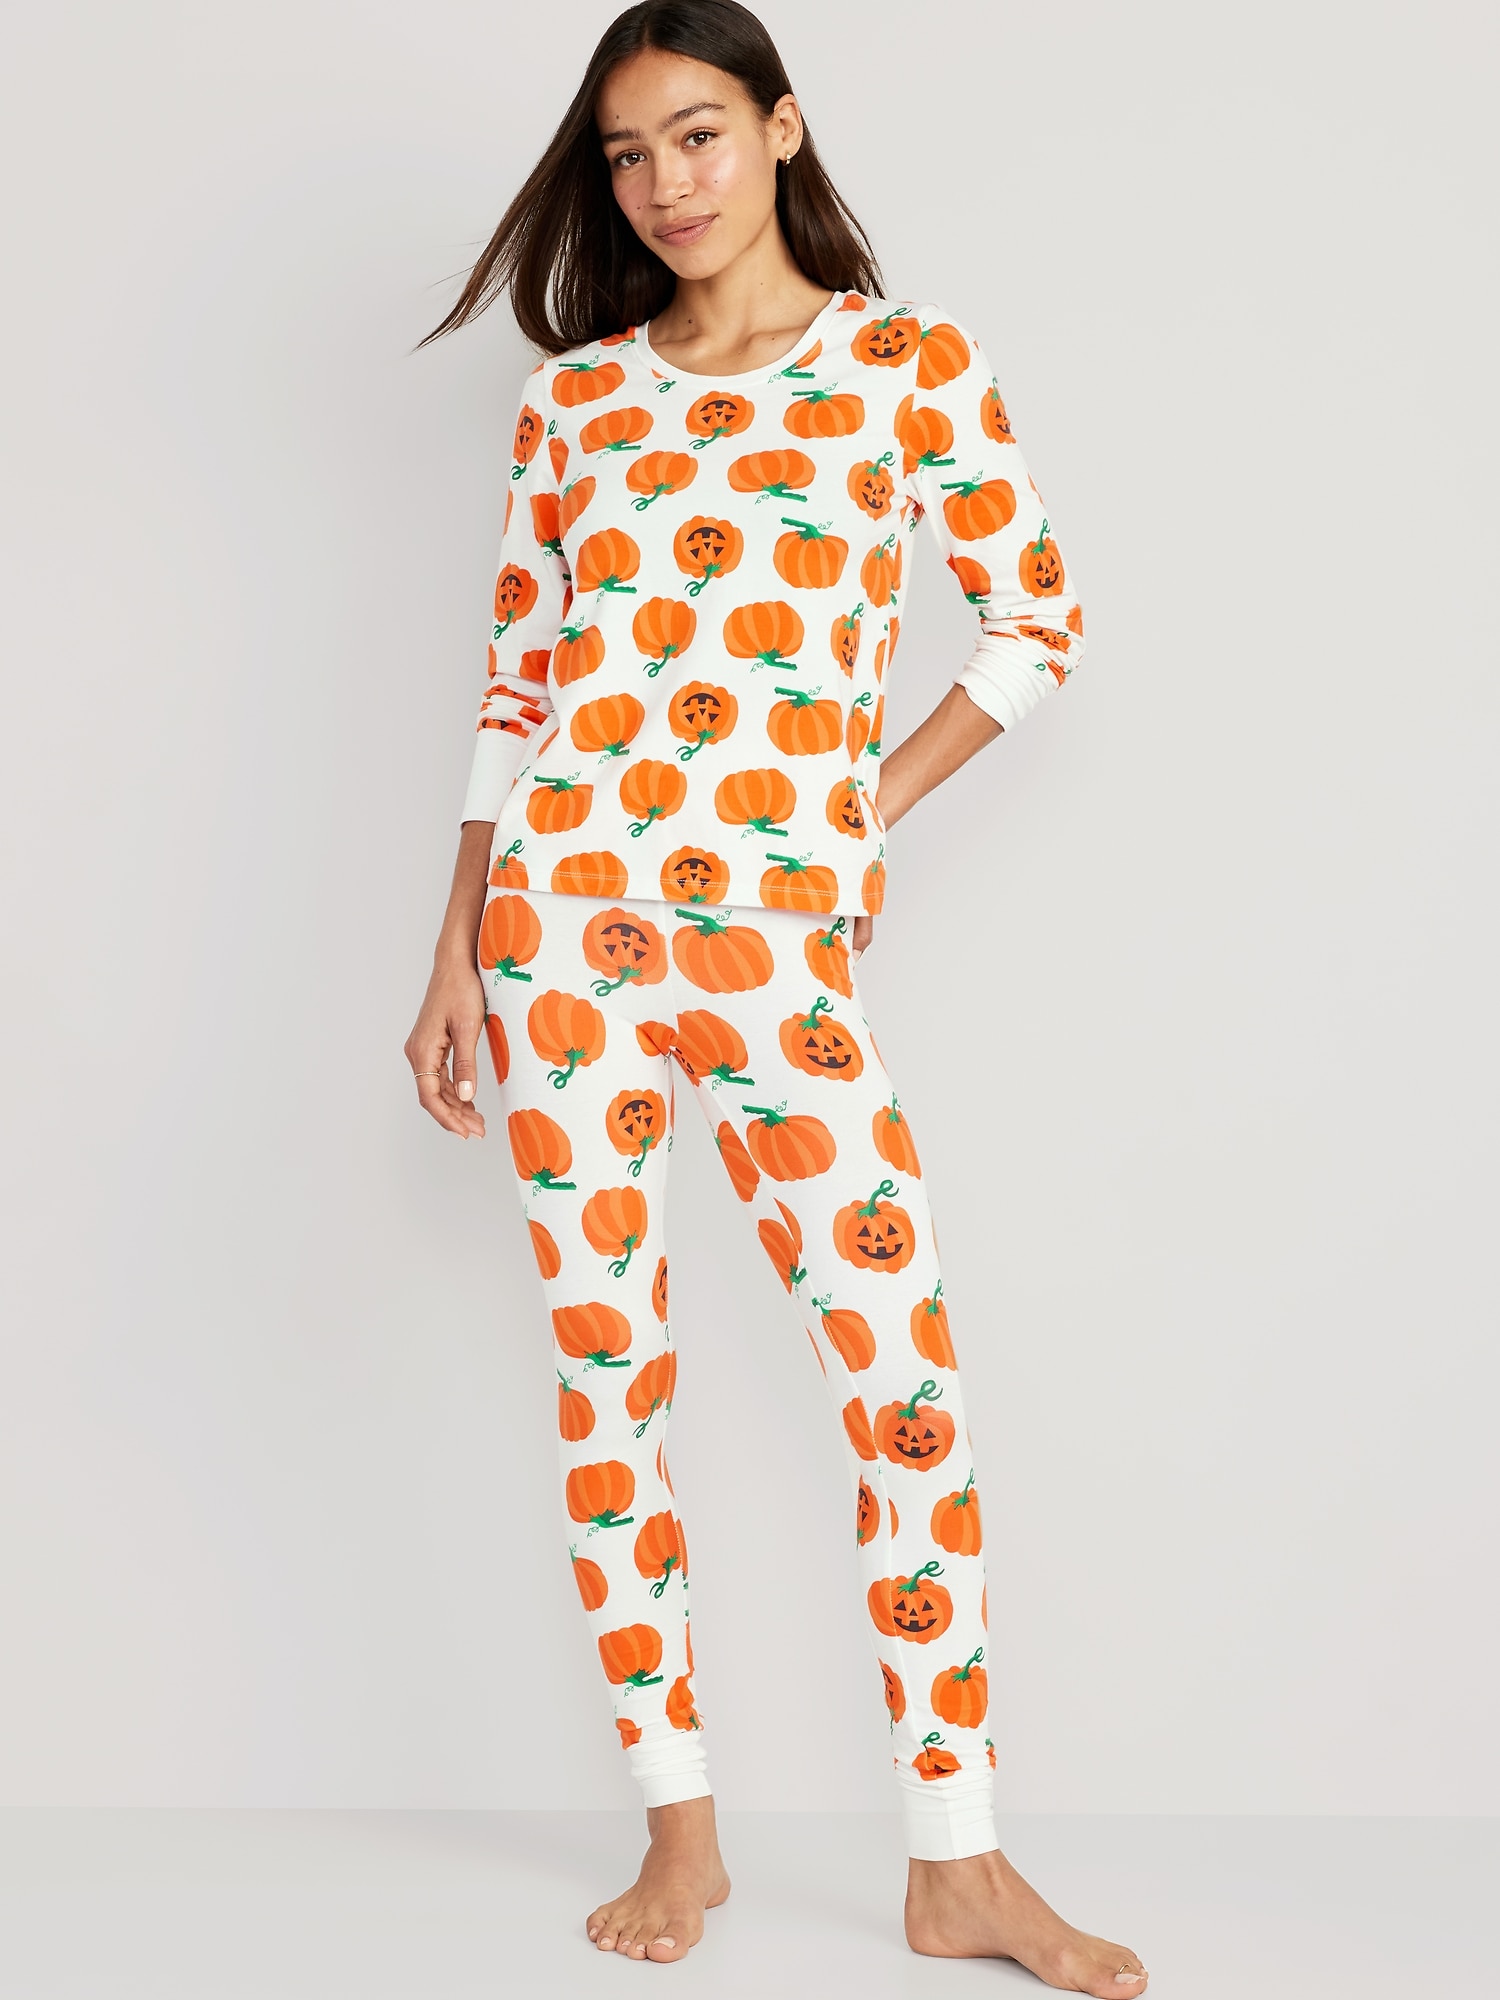 Matching Halloween Print Pajama Set for Women | Old Navy